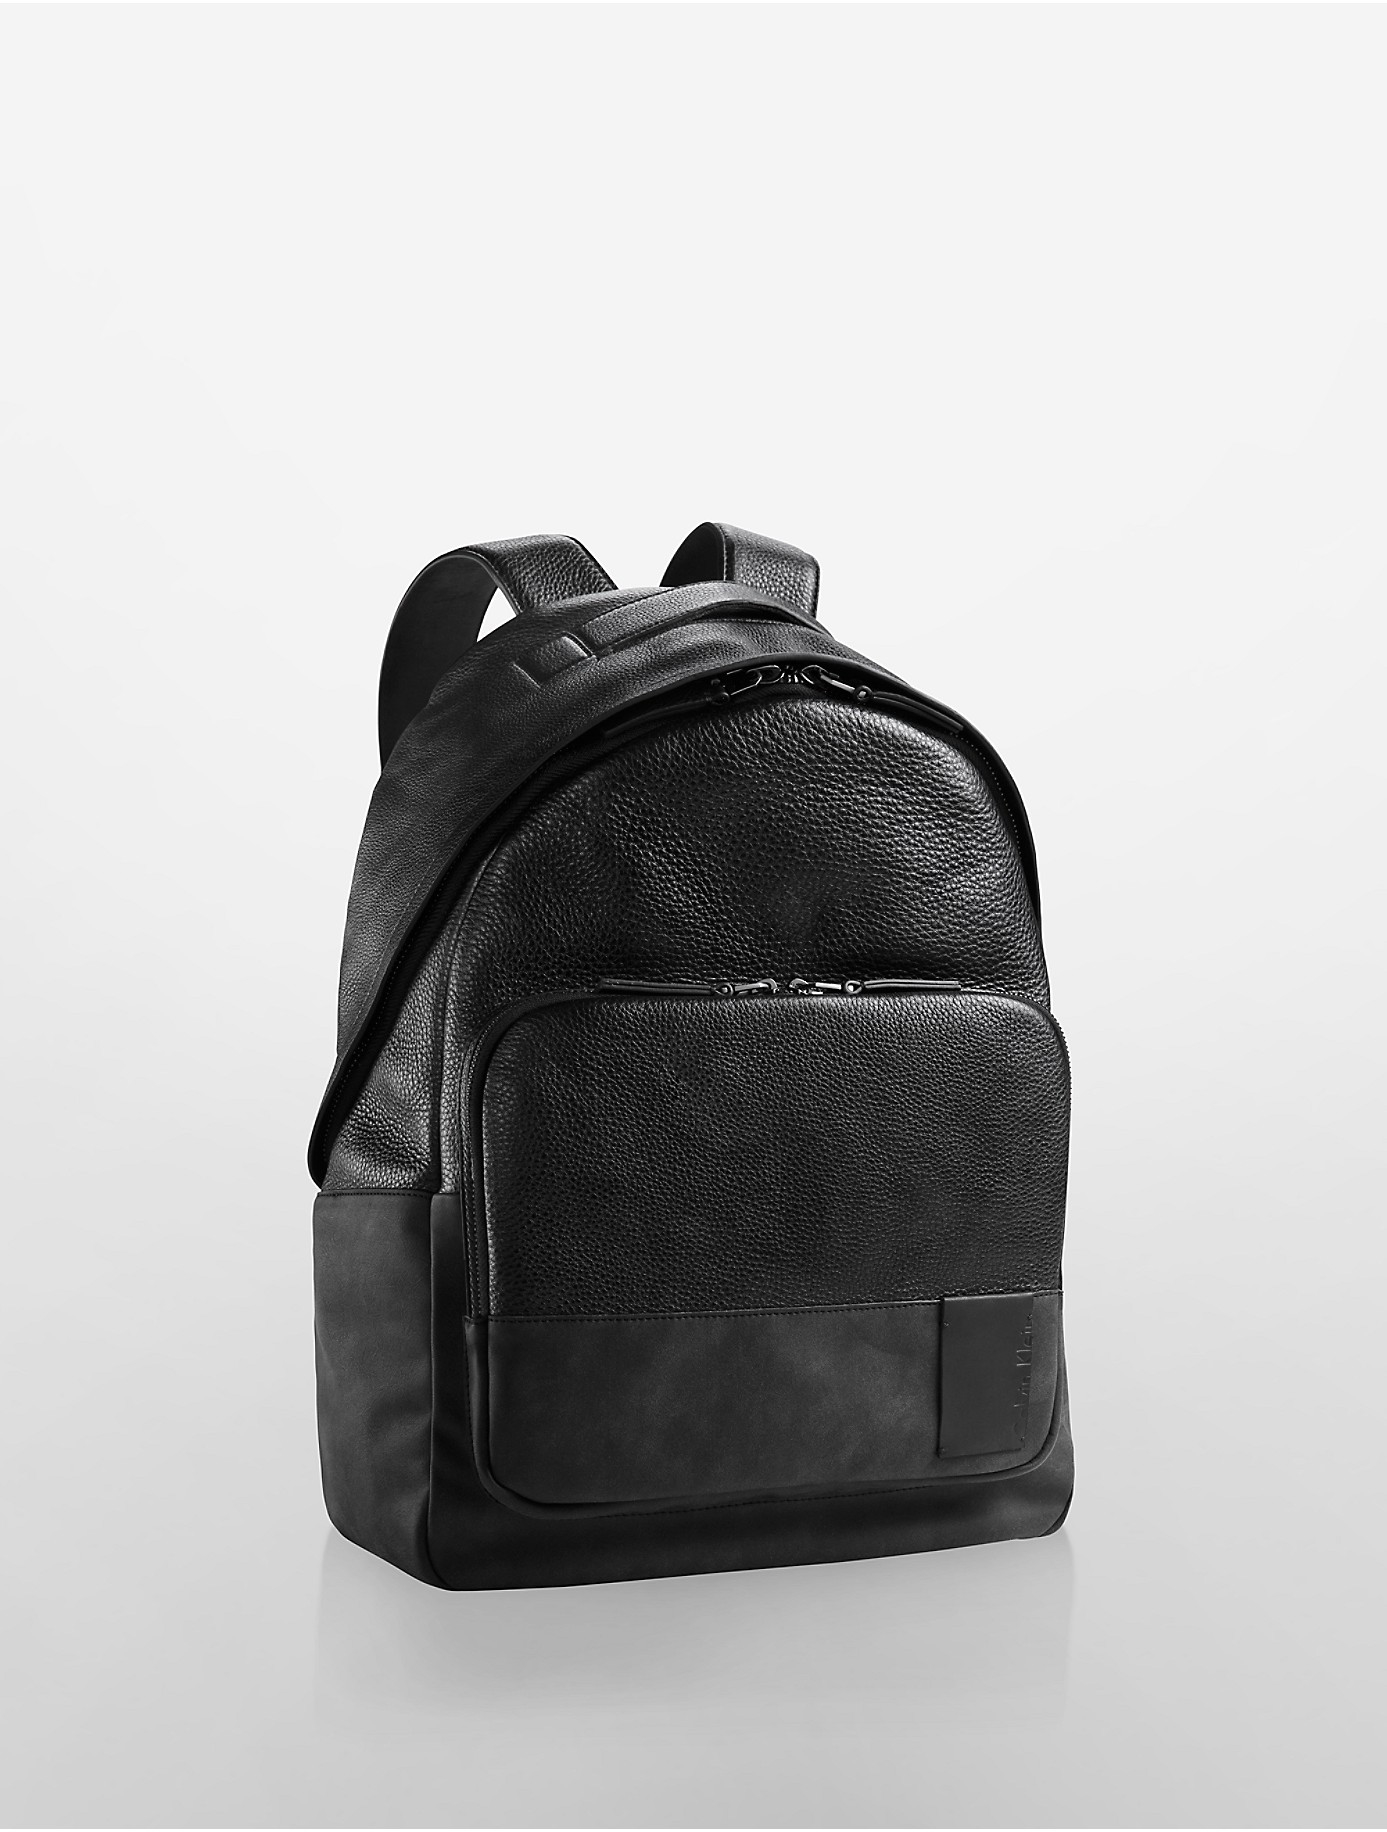 Image result for calvin klein pebble backpack